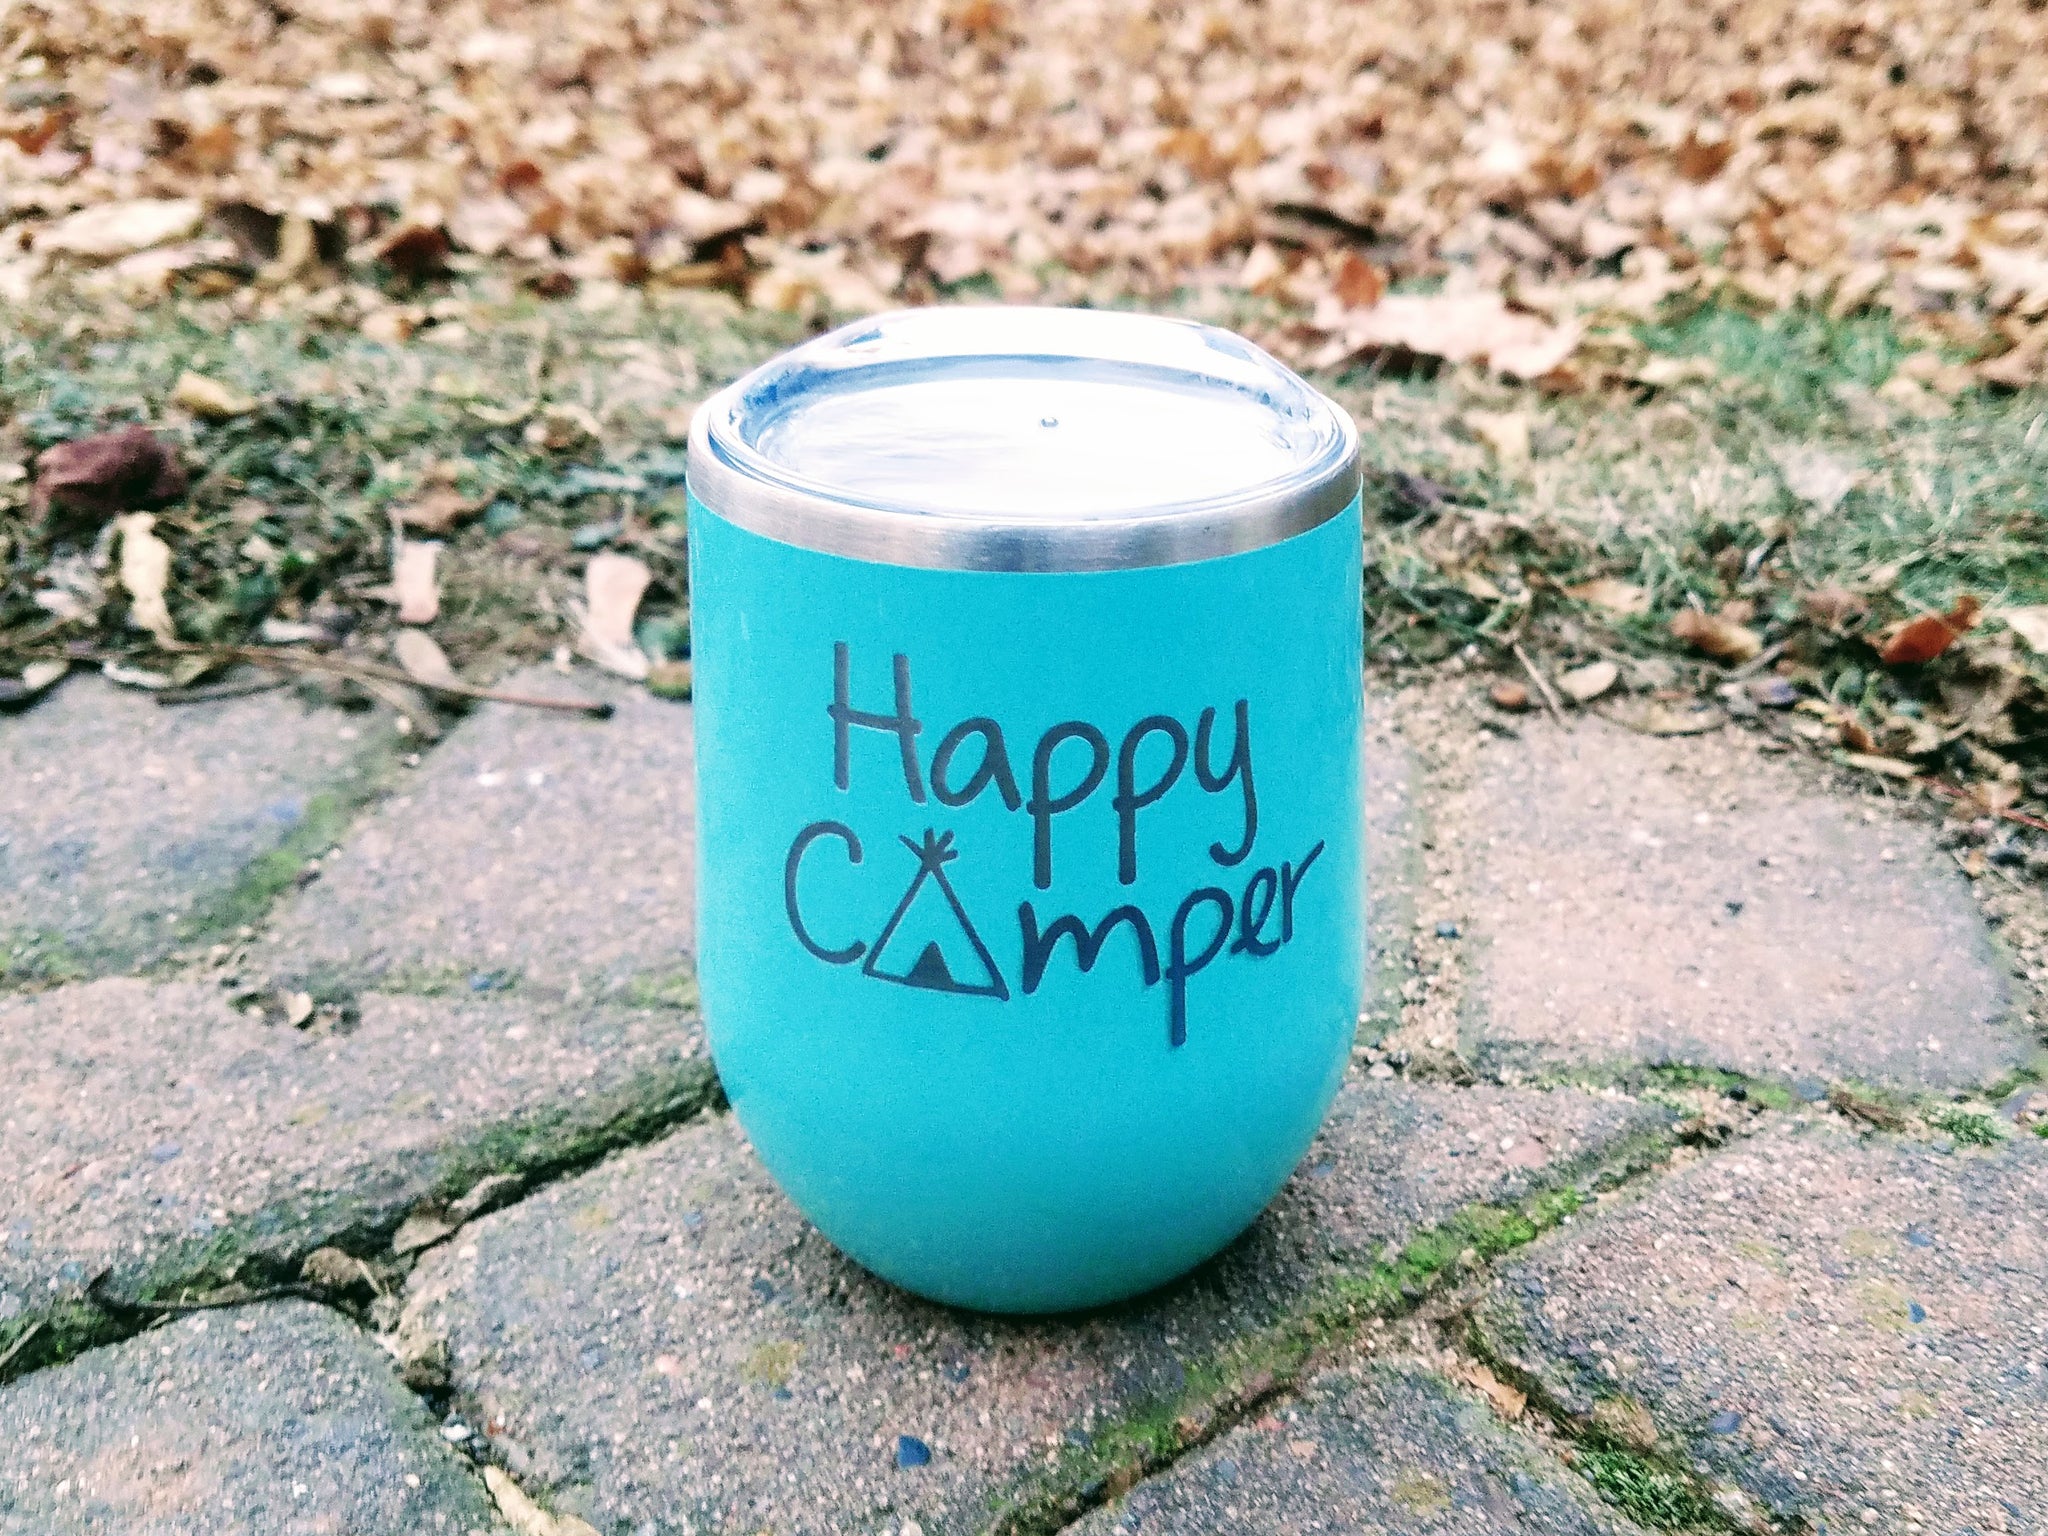 Rambler Coffee Mug, Coffee Cup, Personalized Mug, Custom Coffee Mug, Camper Coffee  Mug, Campfire Mug, Custom Coffee Mug YETI Style 